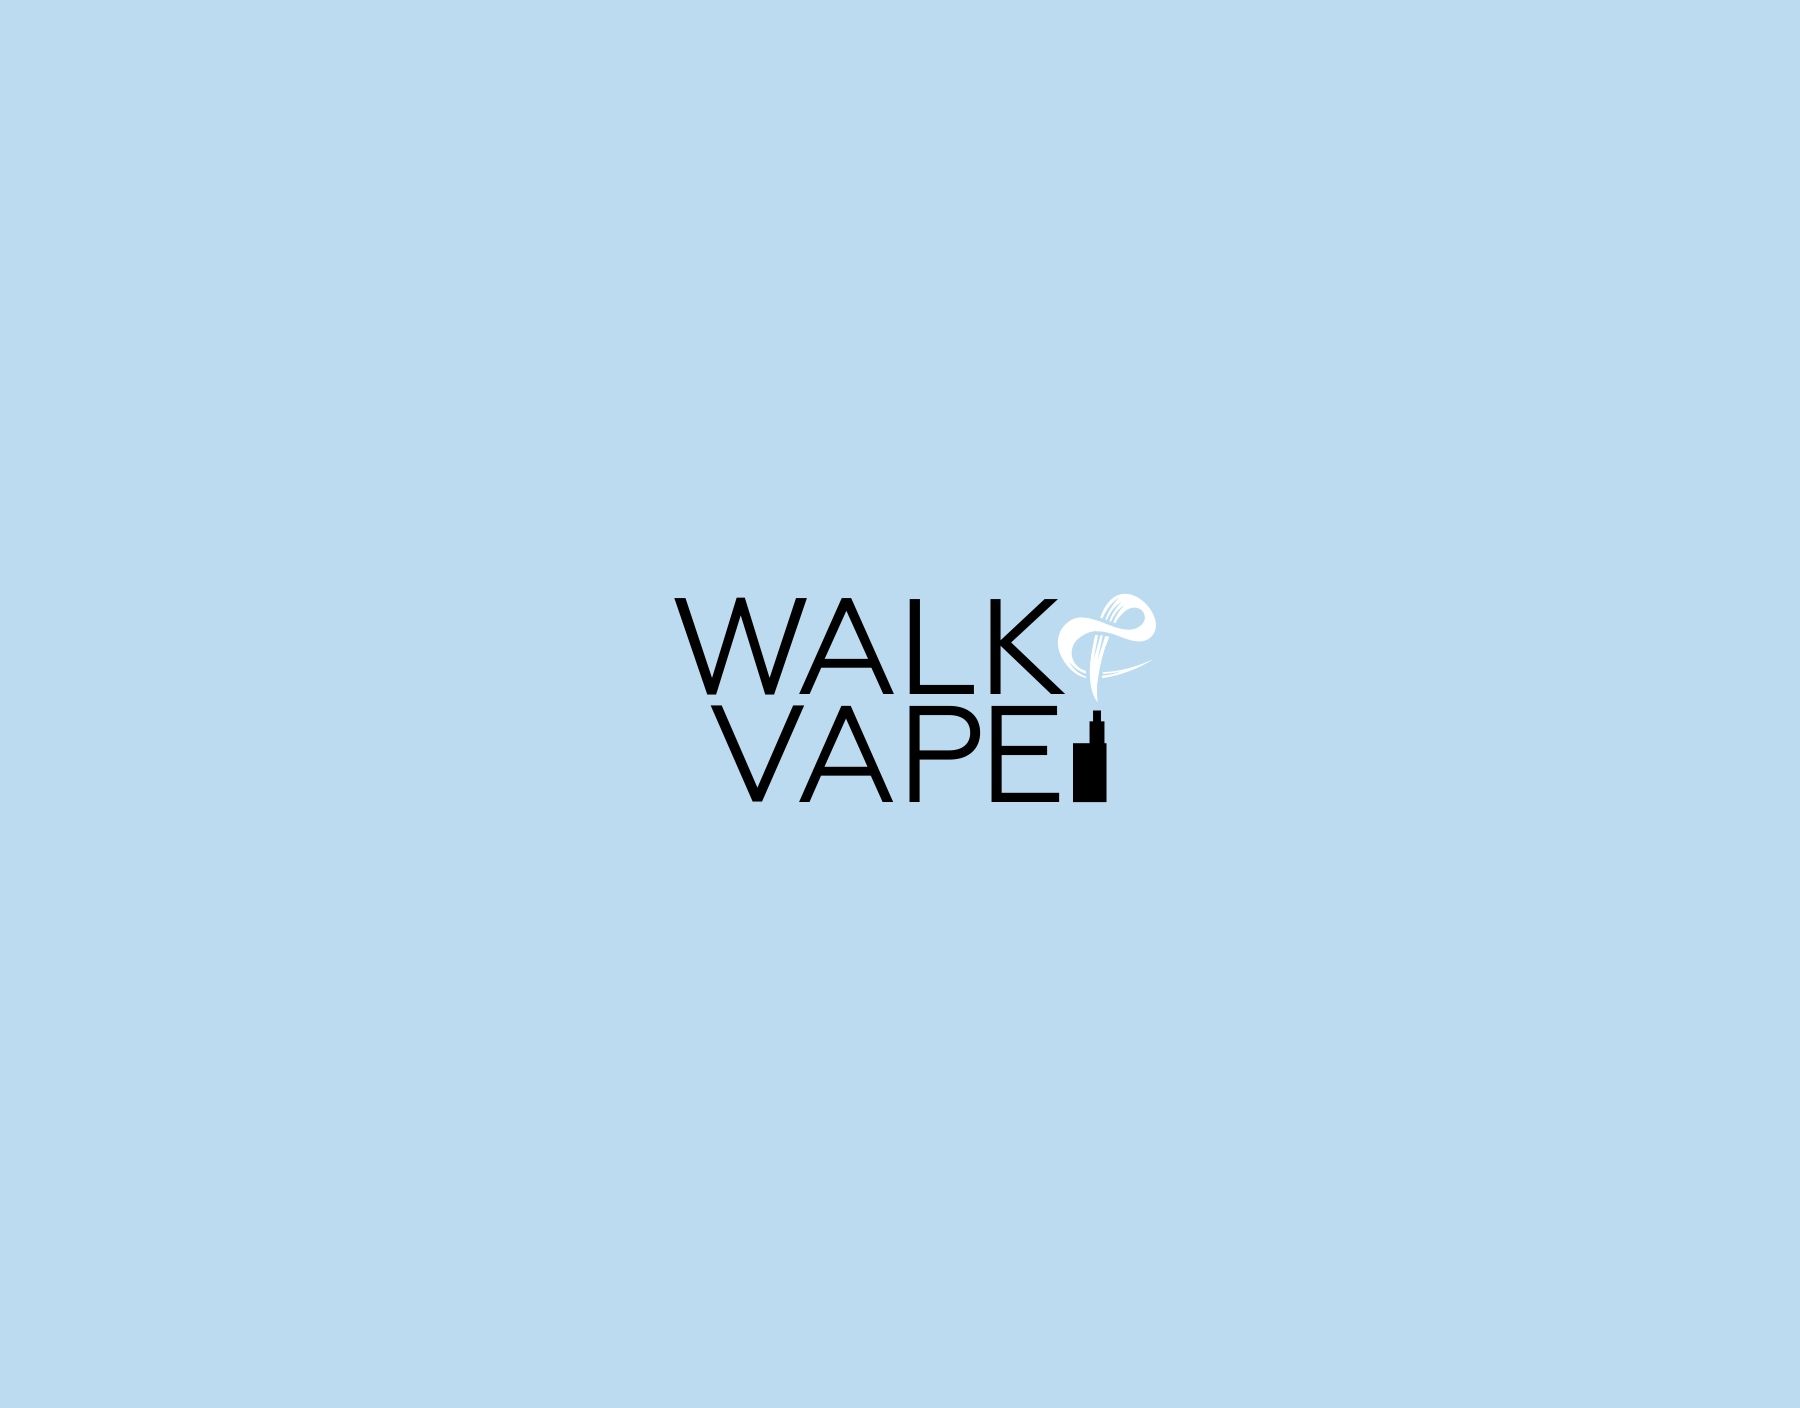 Логотип для Walk&Vape - дизайнер kras-sky